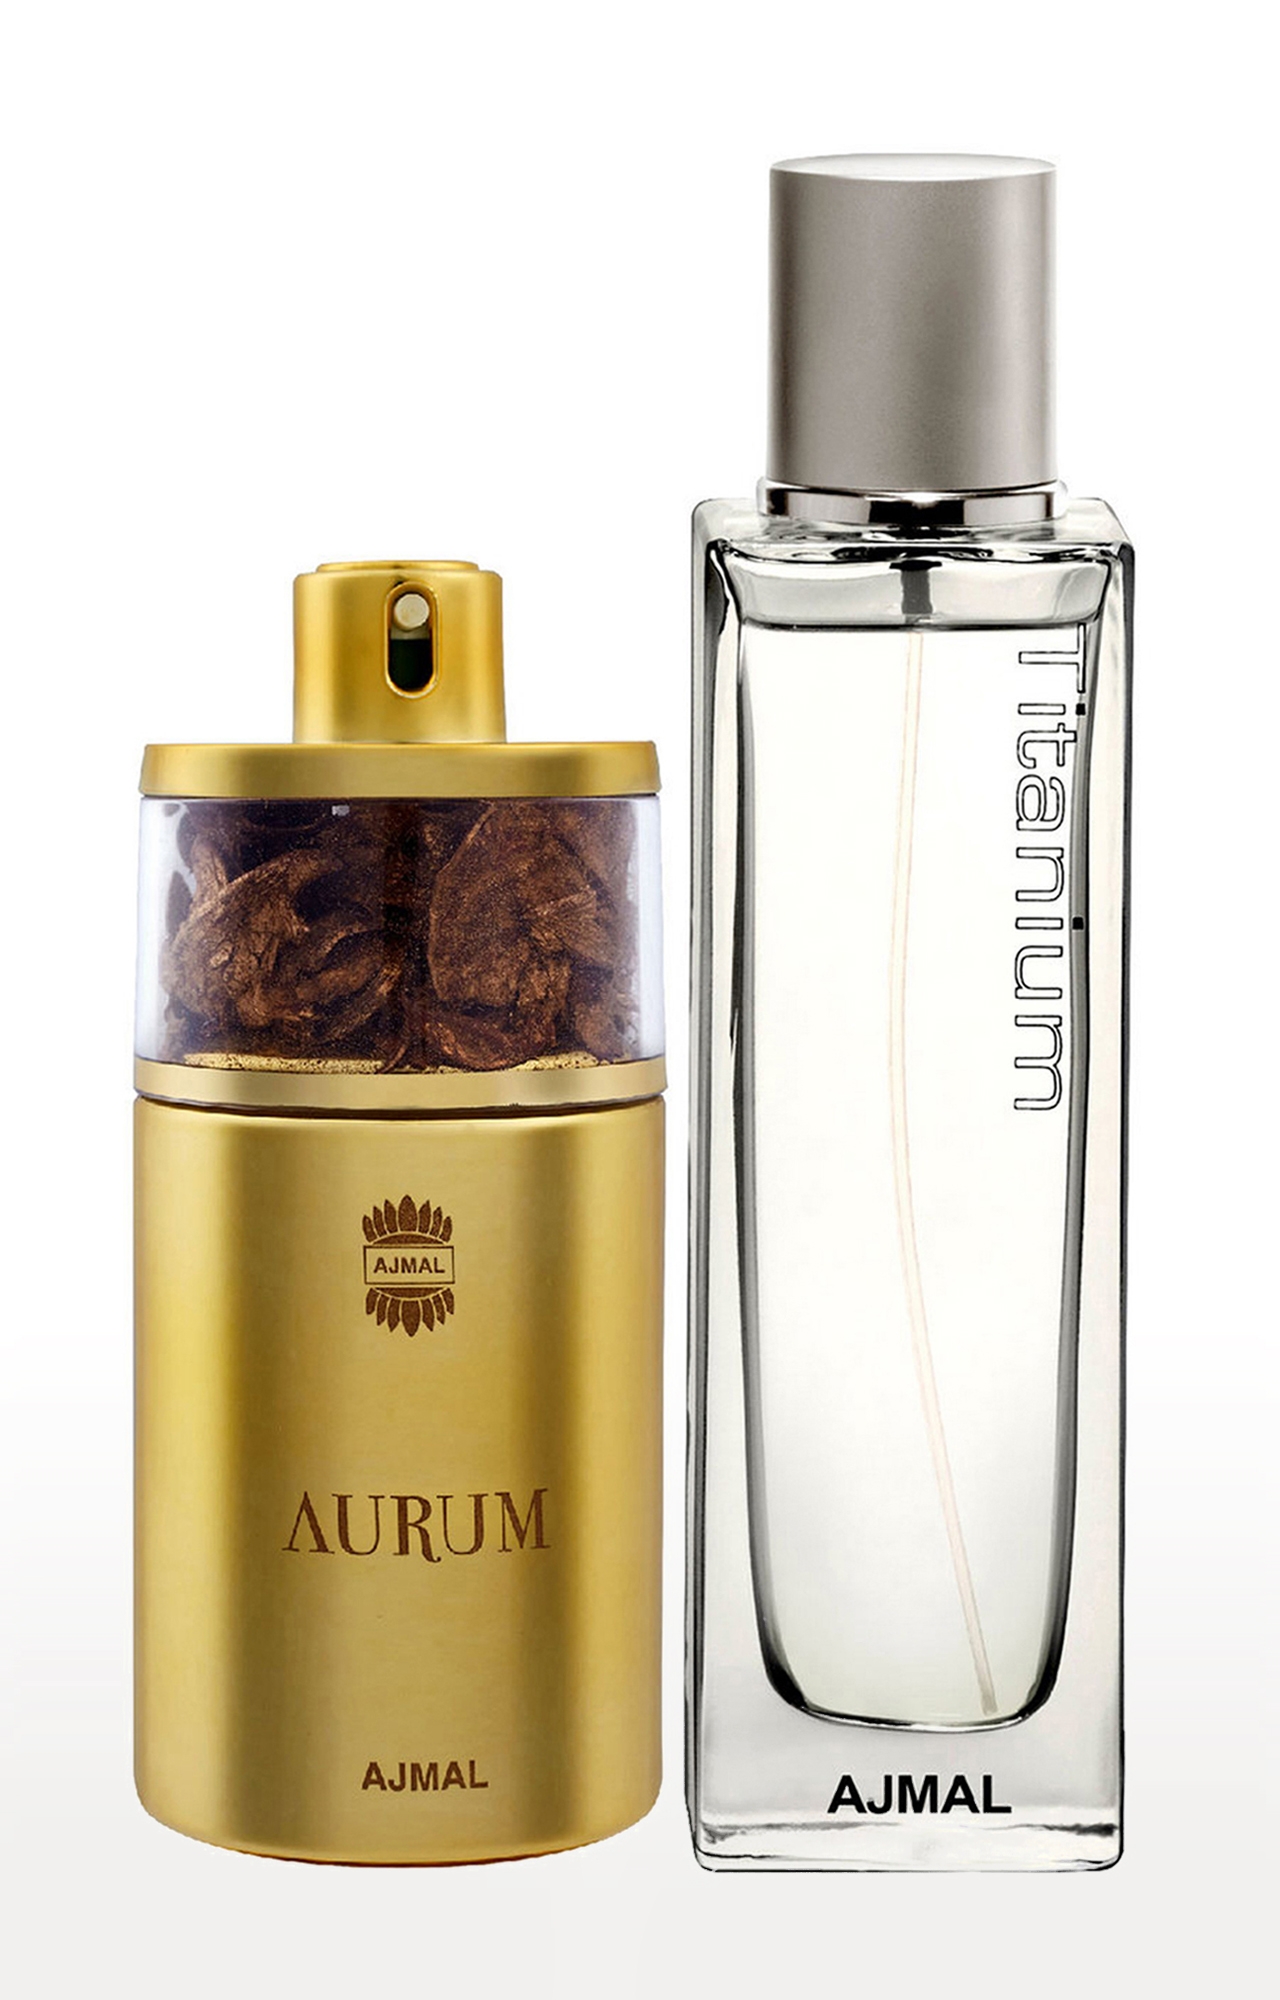 Ajmal Aurum EDP Fruity Perfume 75ml for Women and Titanium EDP Perfume 100ml for Men